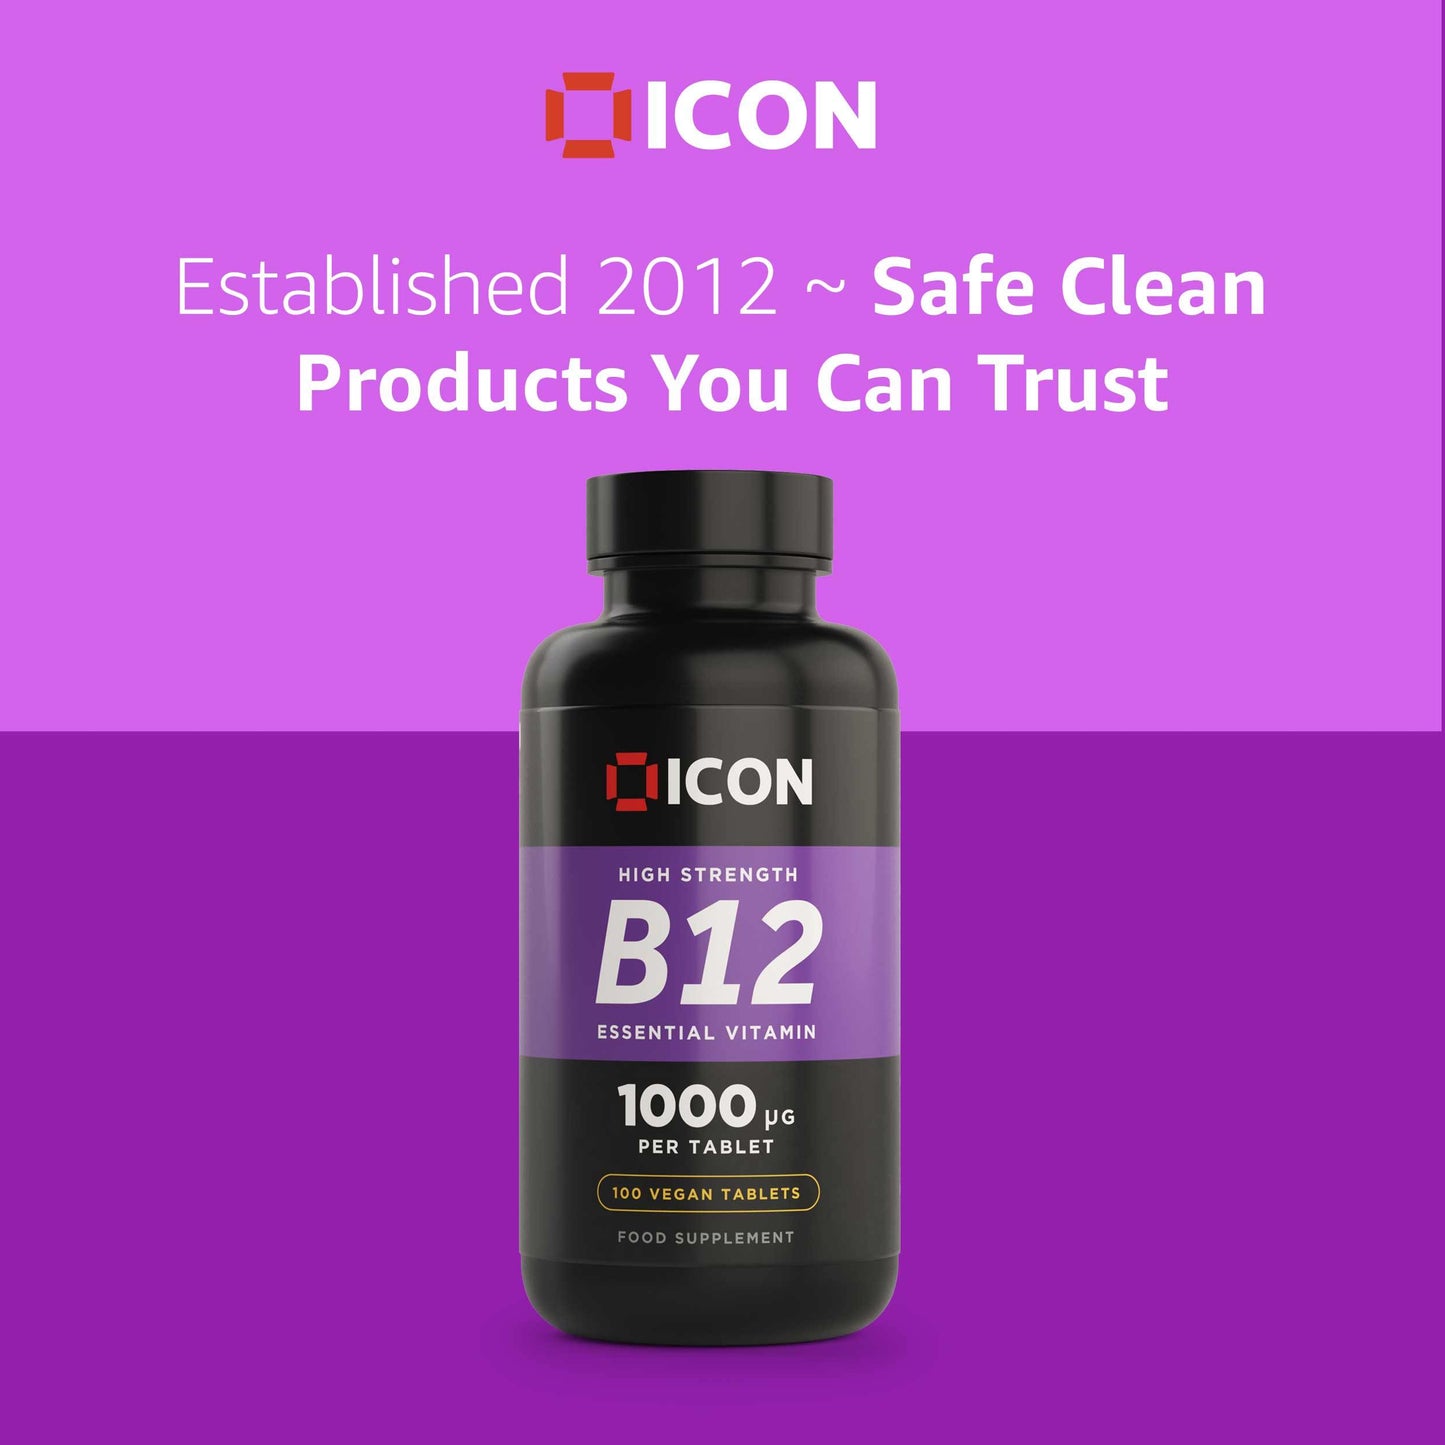 Vitamin B12 (100 Tablets) - ICON Nutrition